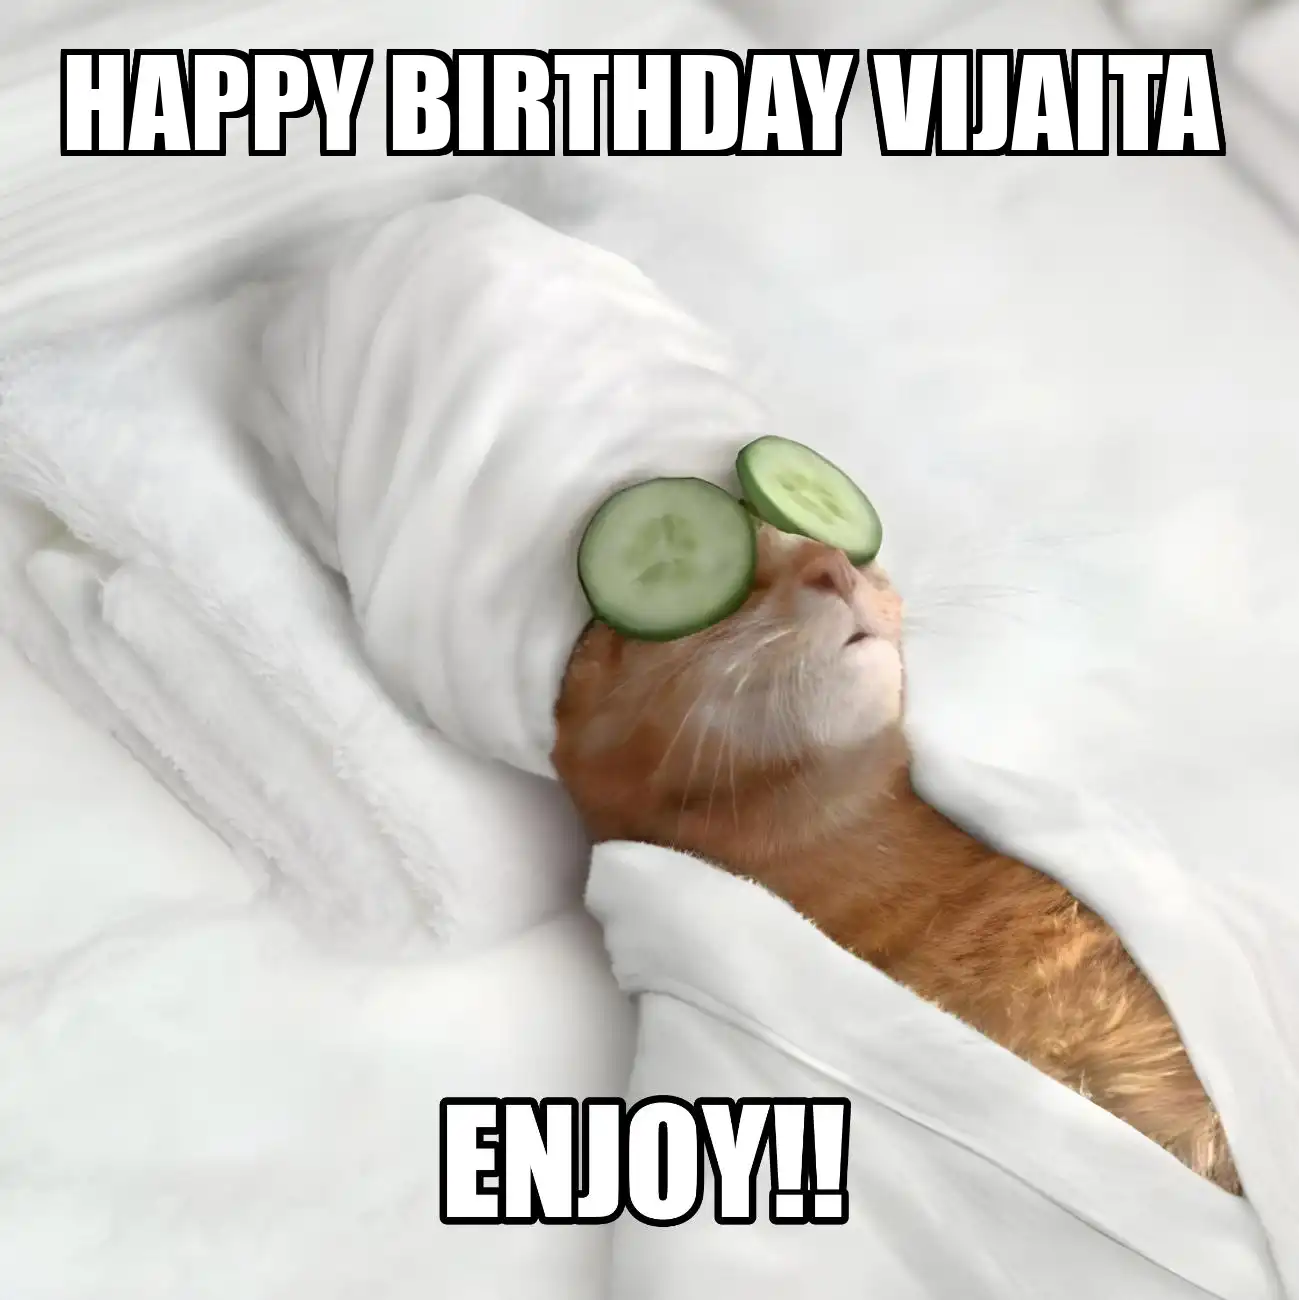 Happy Birthday Vijaita Enjoy Cat Meme